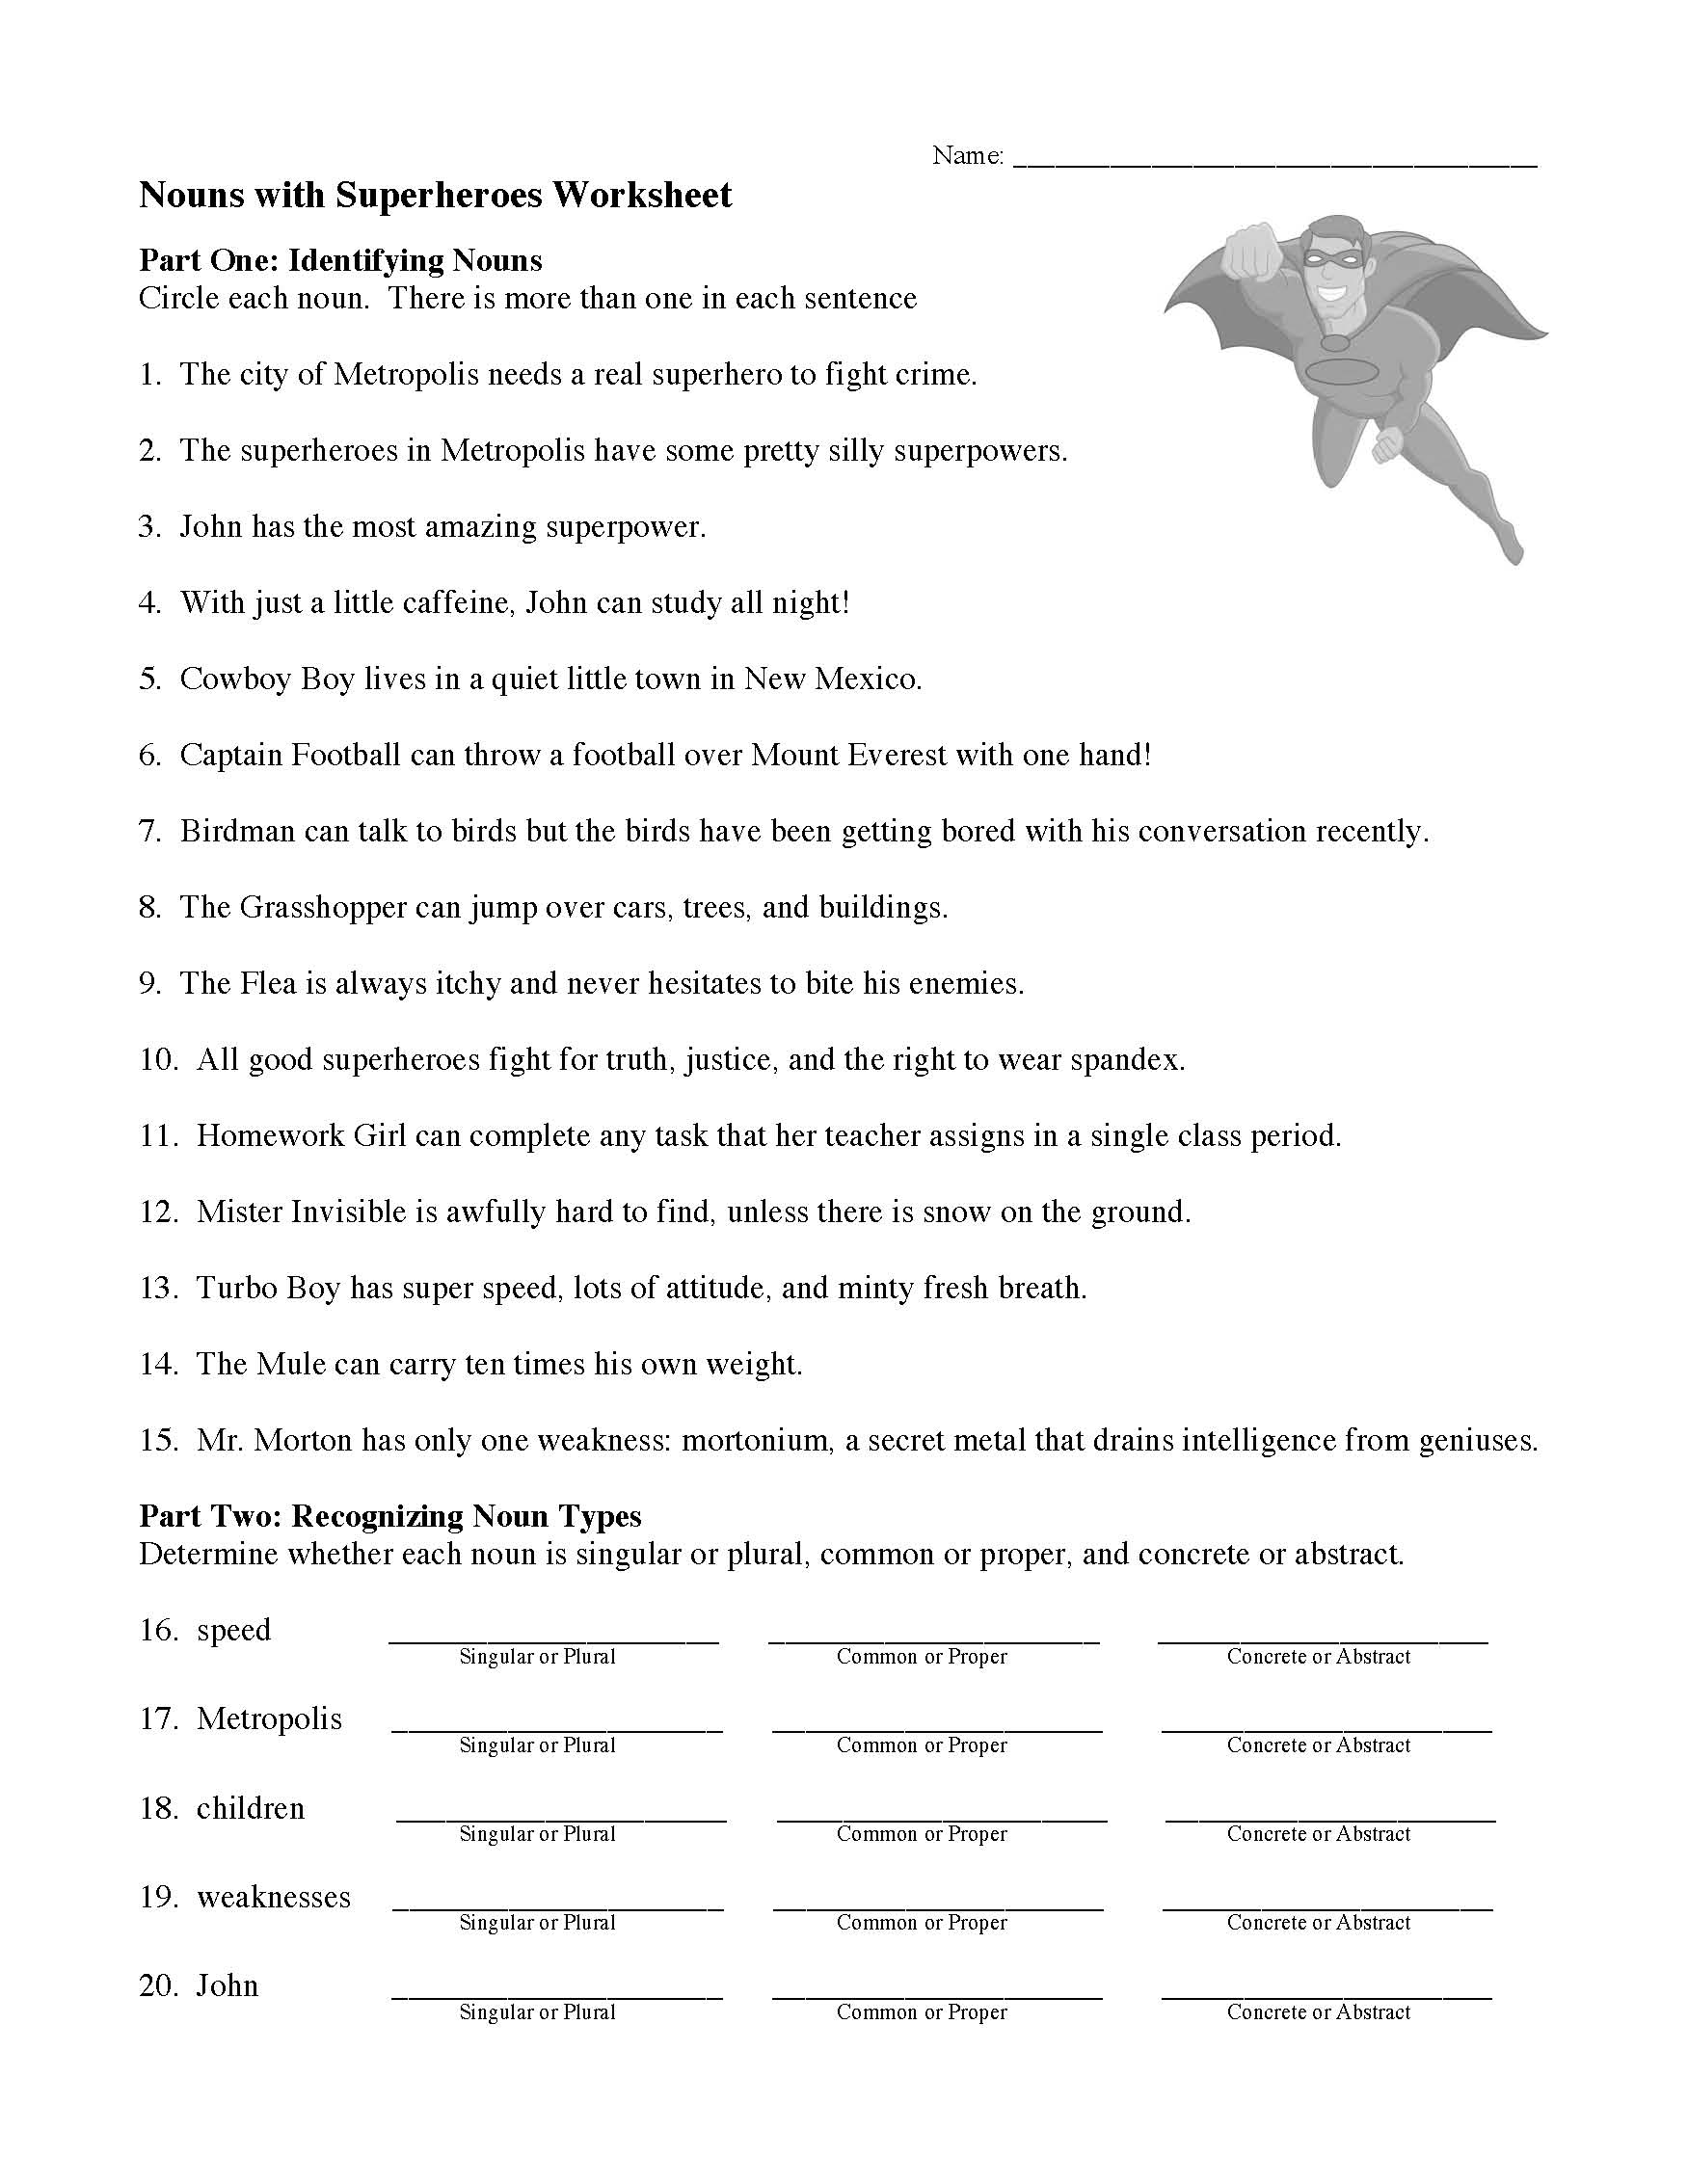 noun-worksheets-for-elementary-school-printable-free-k5-learning-grade-2-nouns-worksheets-k5